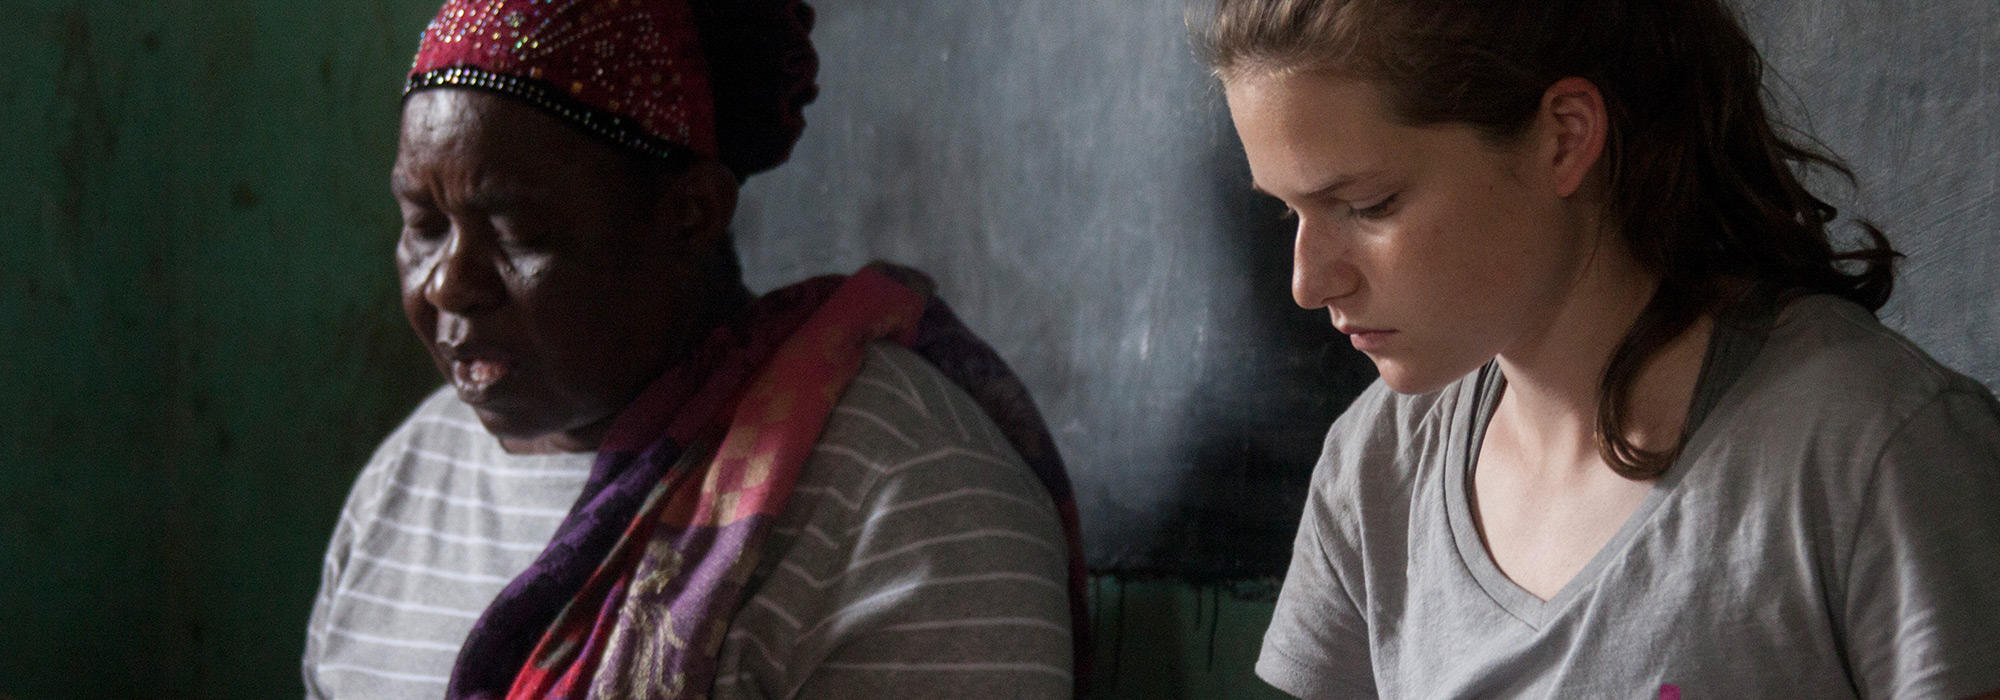 UC student Maria Pancioli helps intake patients at a free clinic in Tanzania